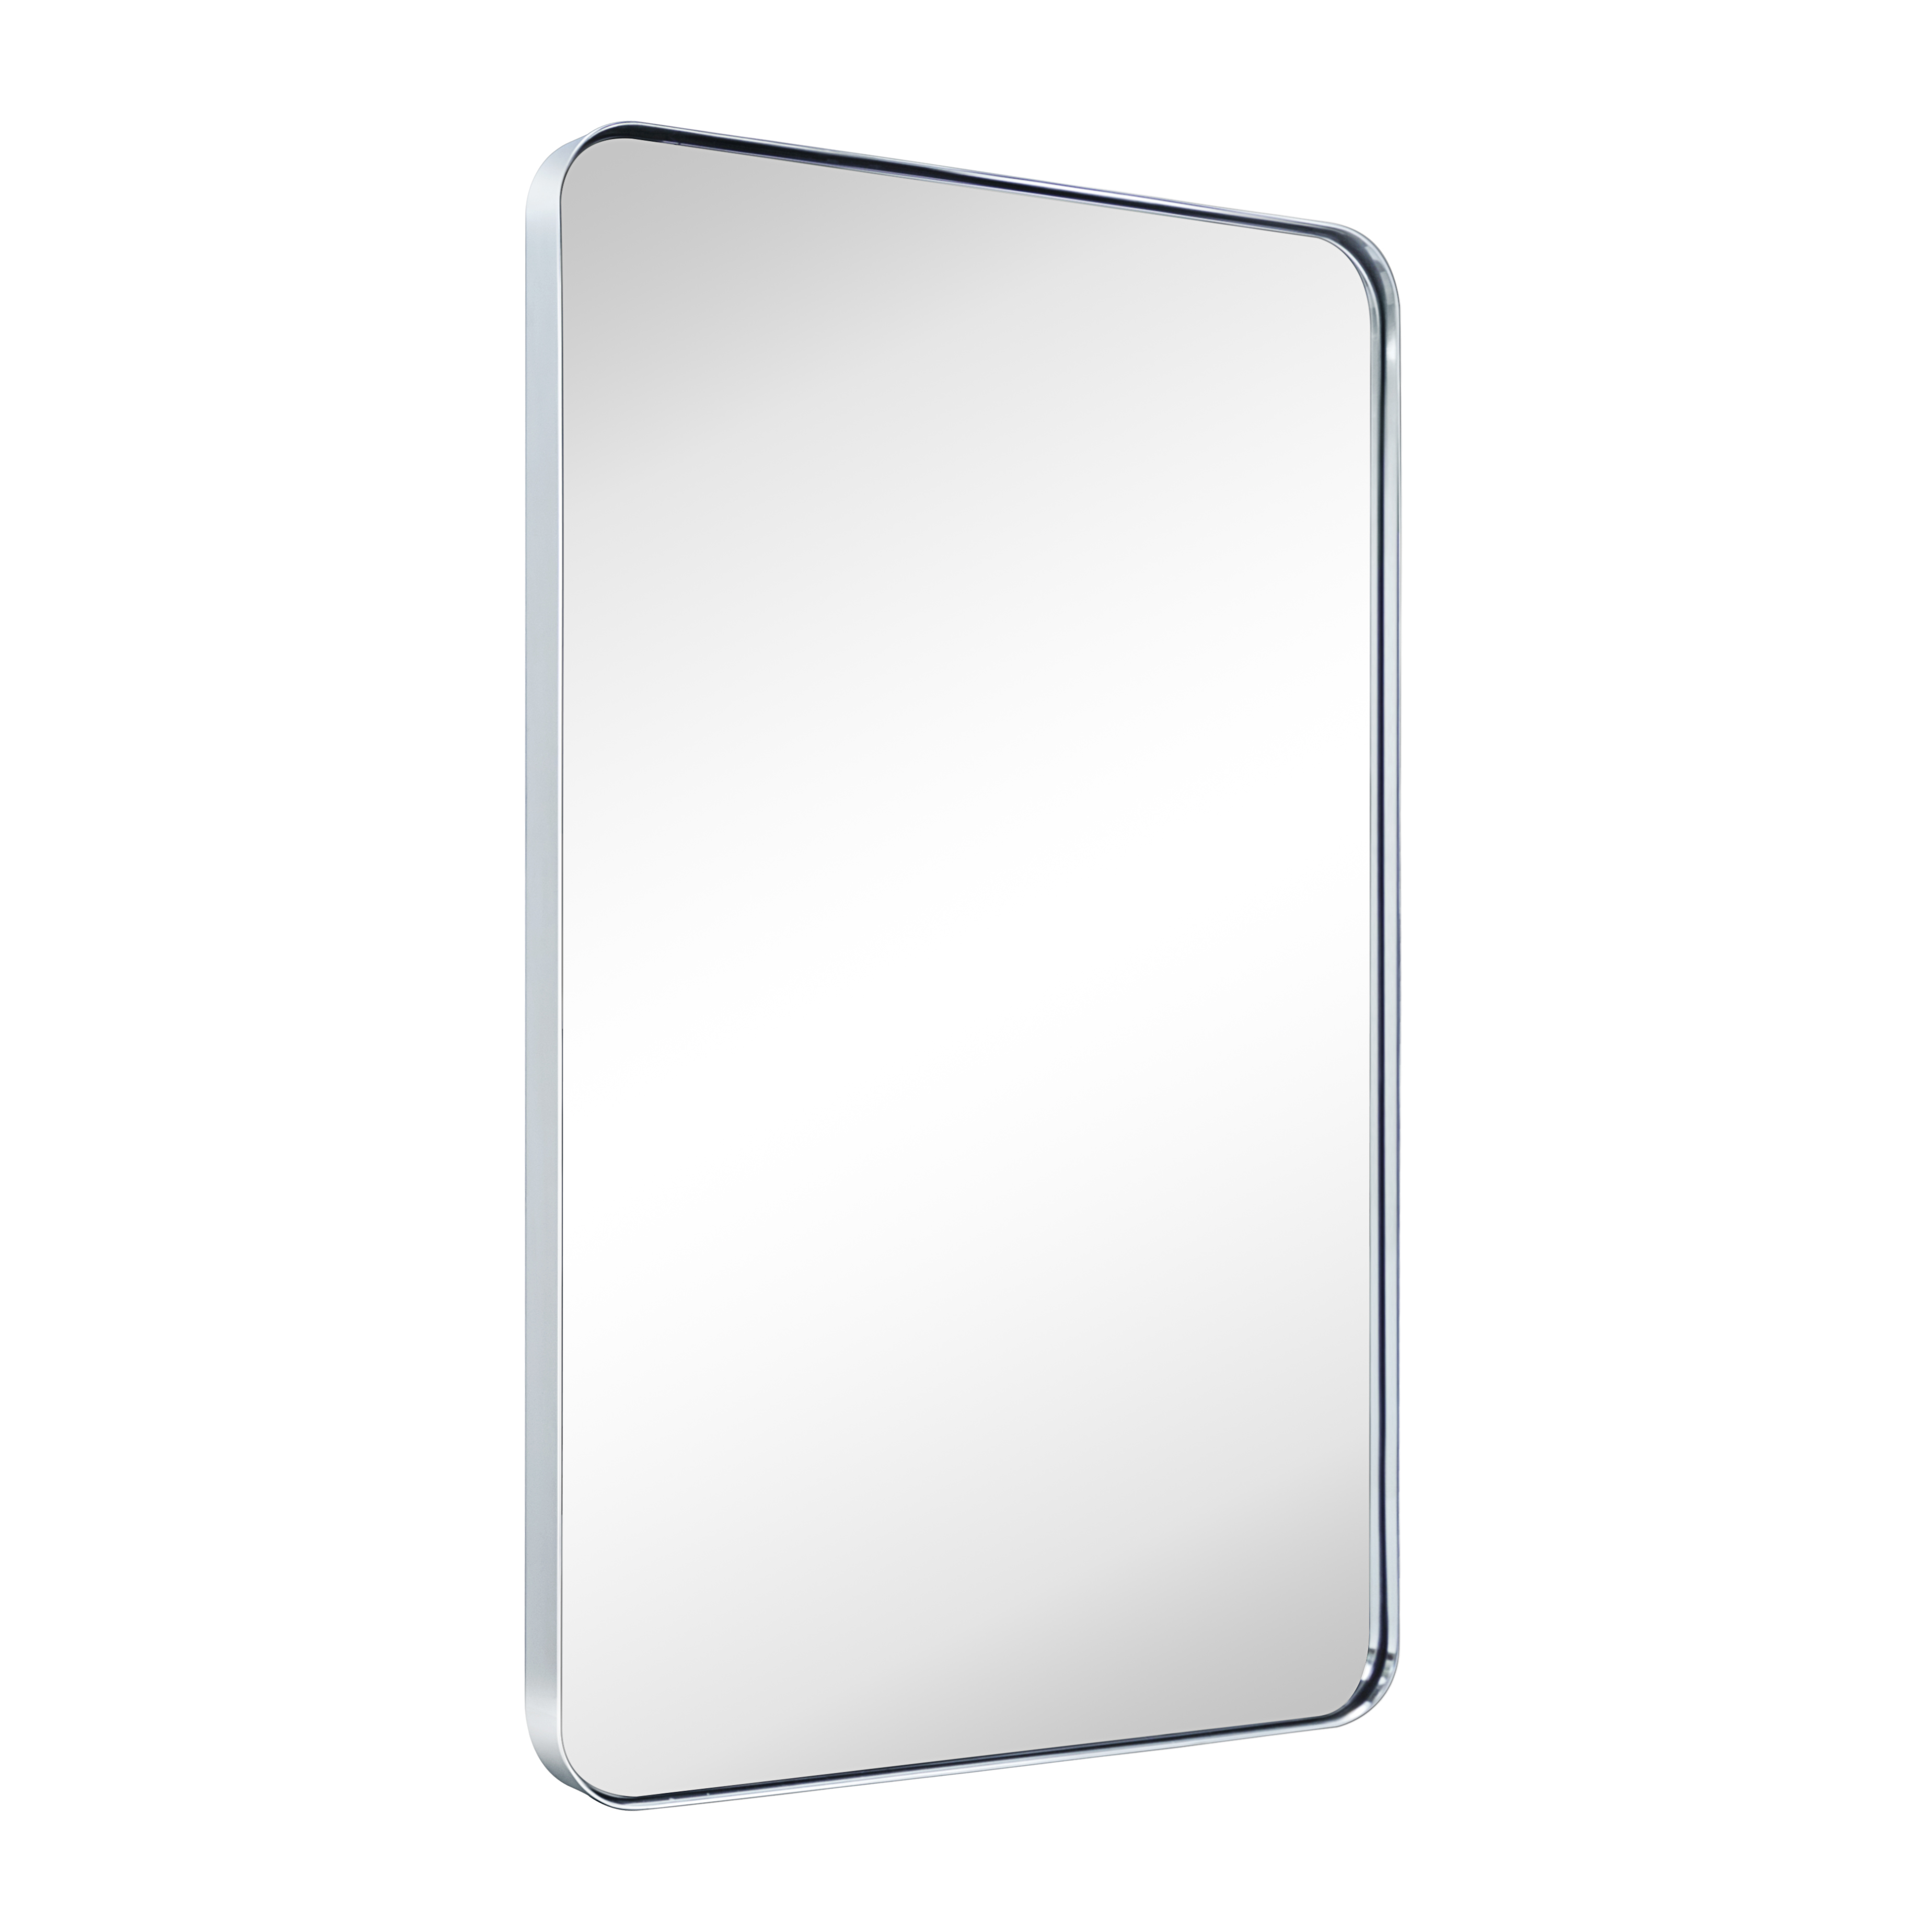 Kengston Modern & Contemporary Rectangular Bathroom Vanity Mirrors-24x36-Chrome